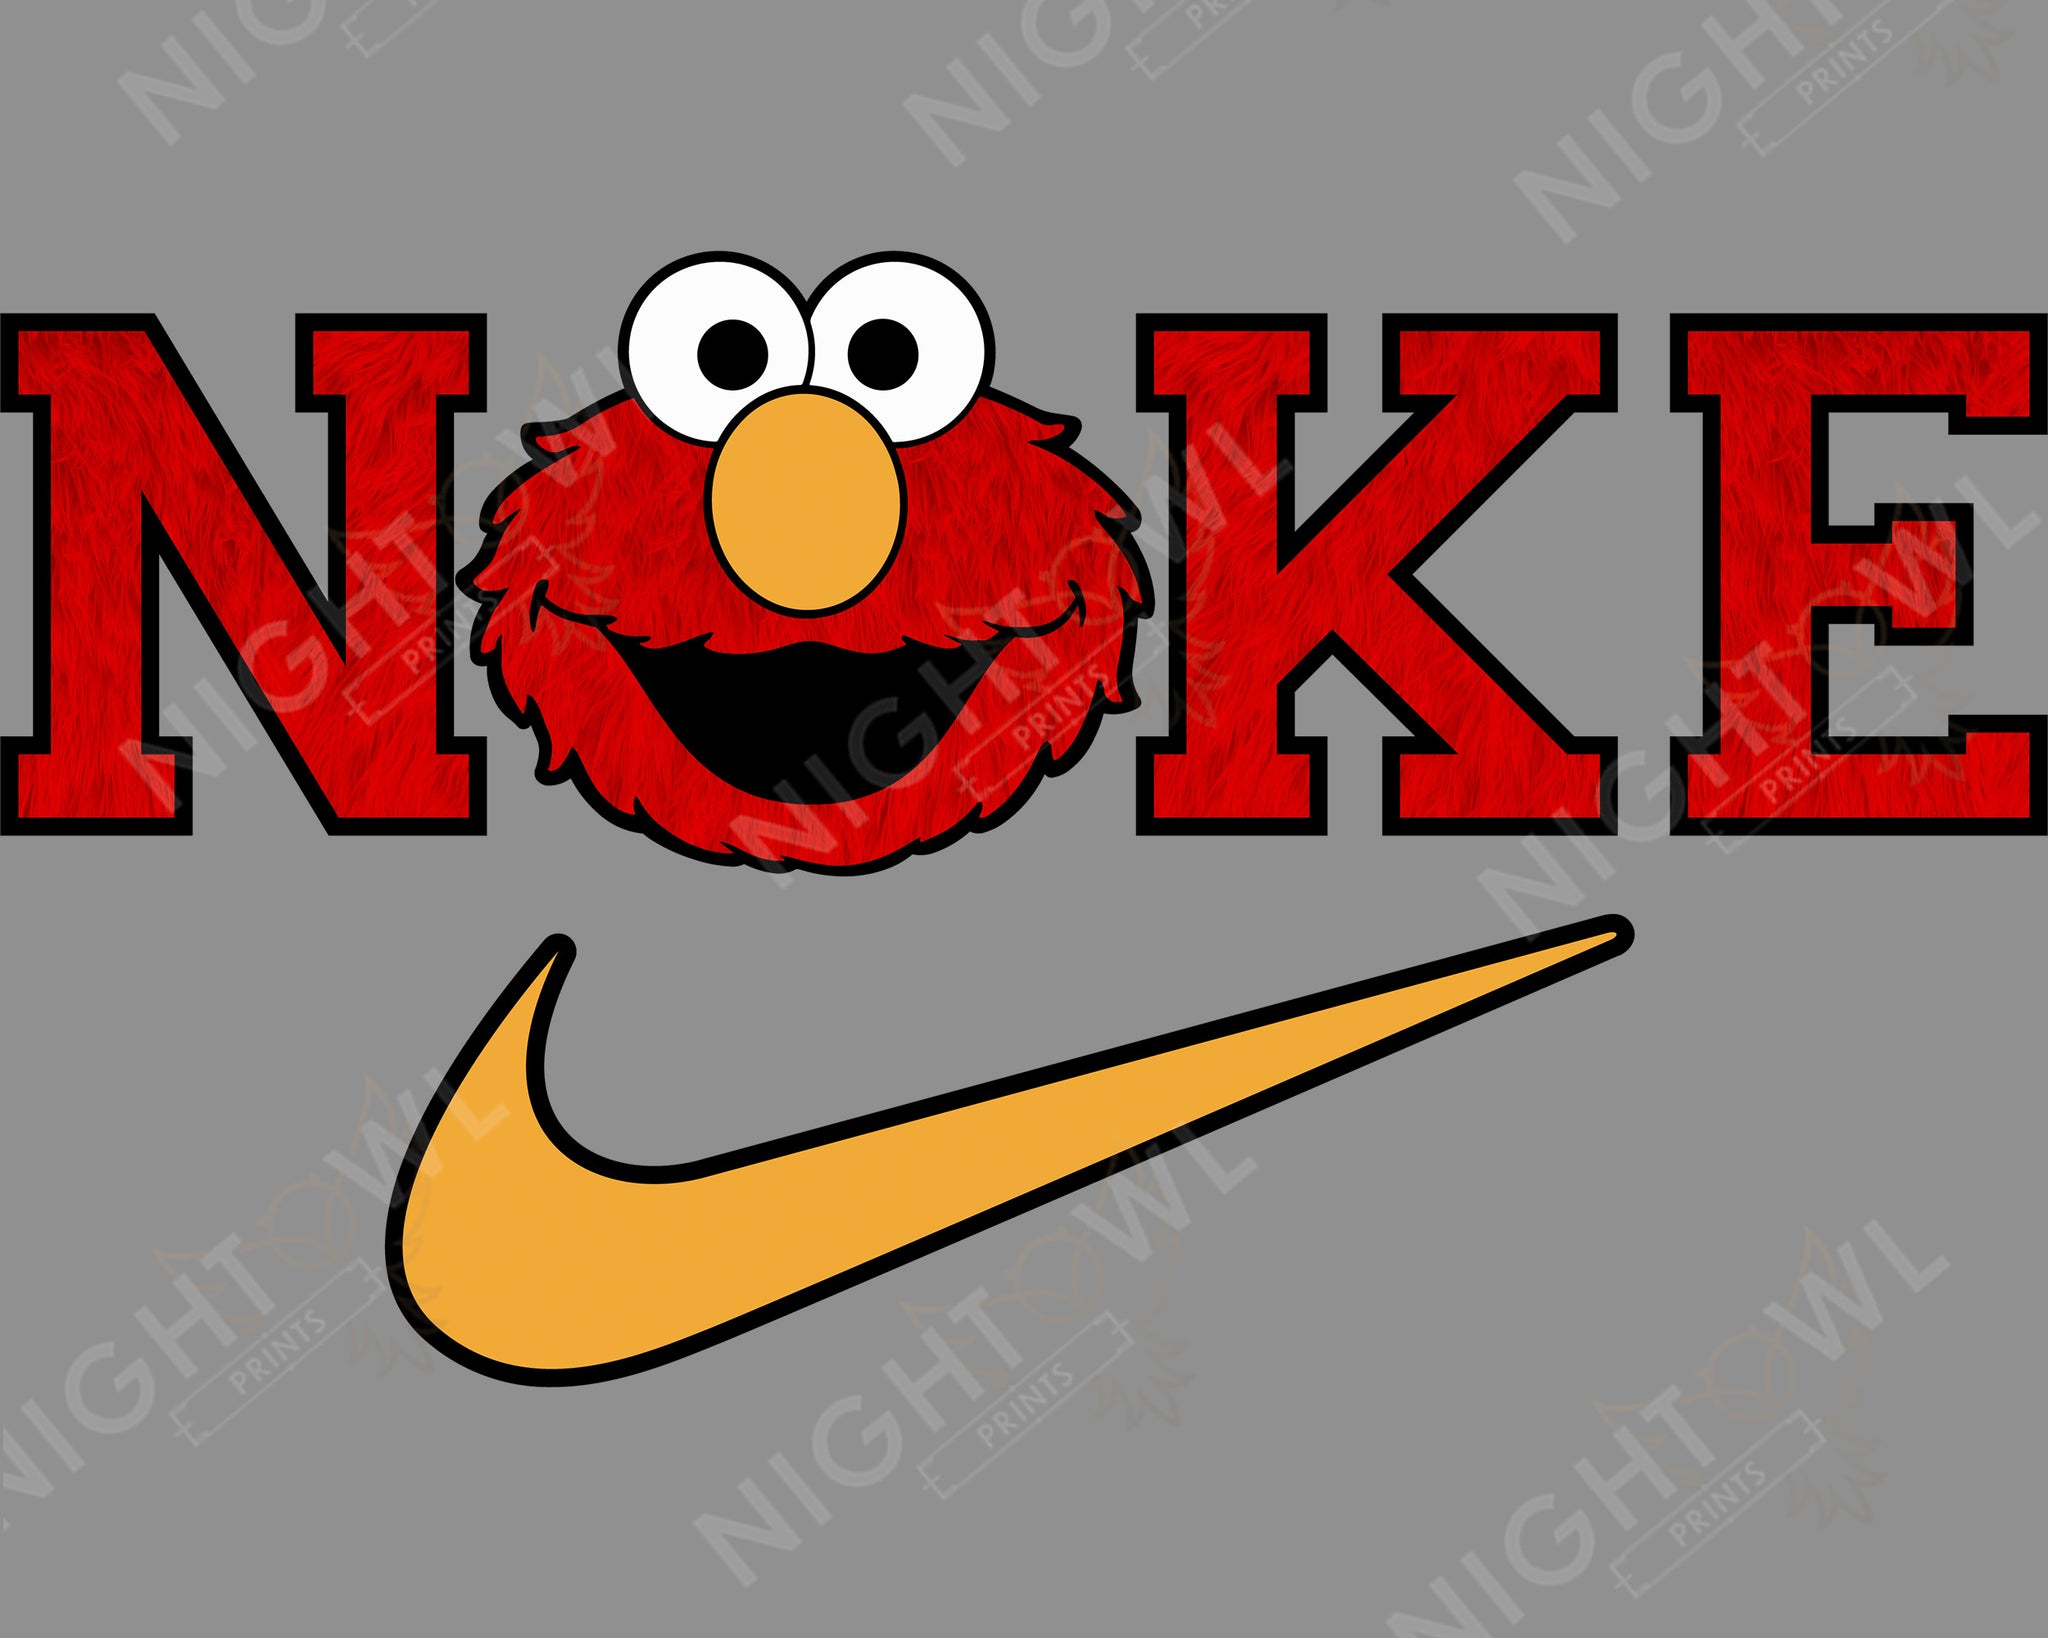 Download file PNG. Nike Elmo fur face. 300 DPI.  Print ready file.